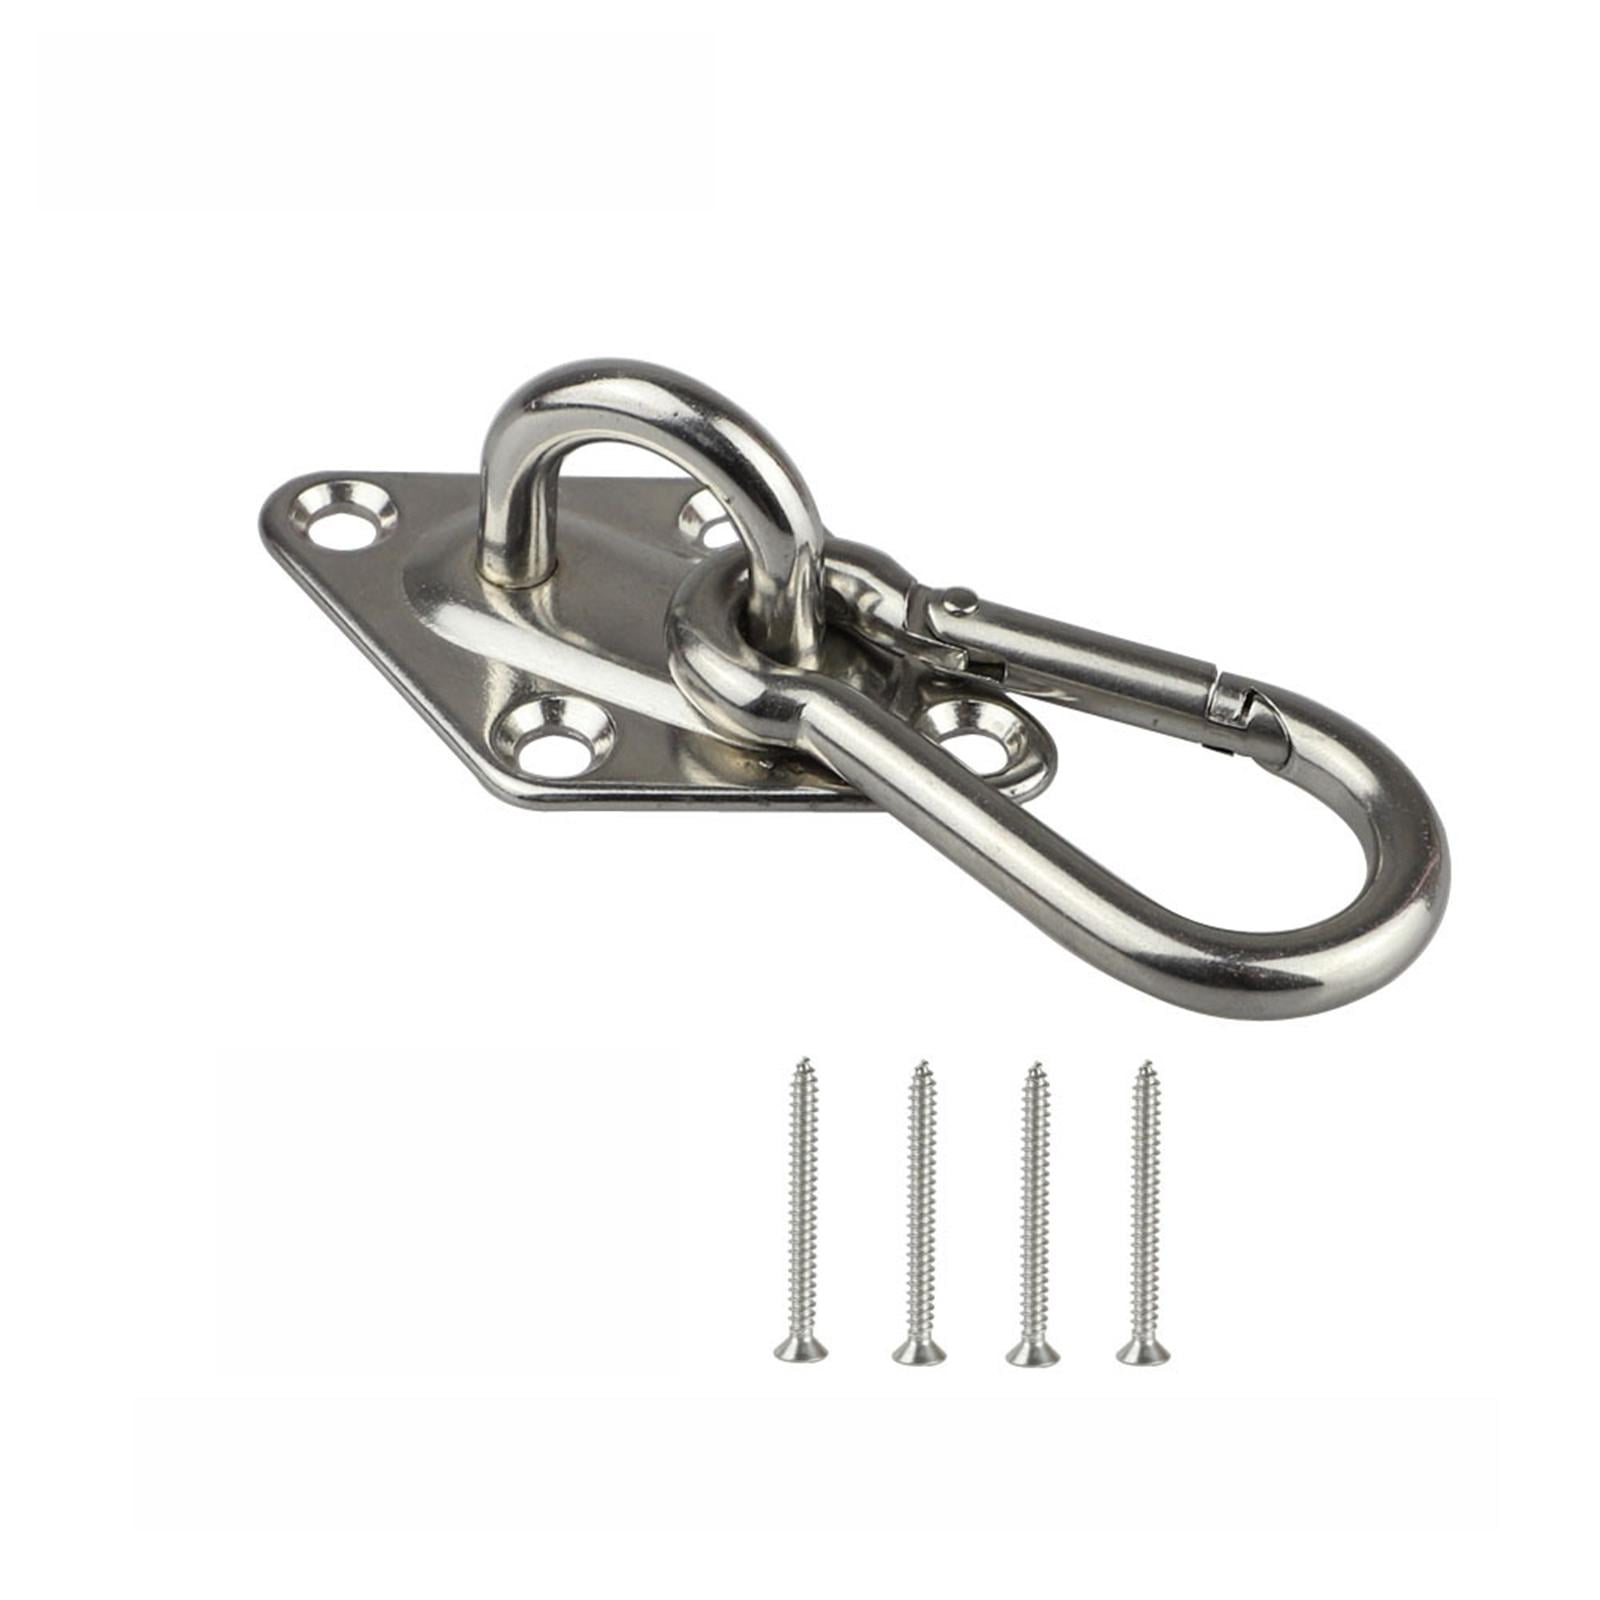 ELYFLAIR® Heavy Duty Ceiling Hook - Carabiner Hook for Hanging Chair, Punch  Bag, Swing, Hammock - High